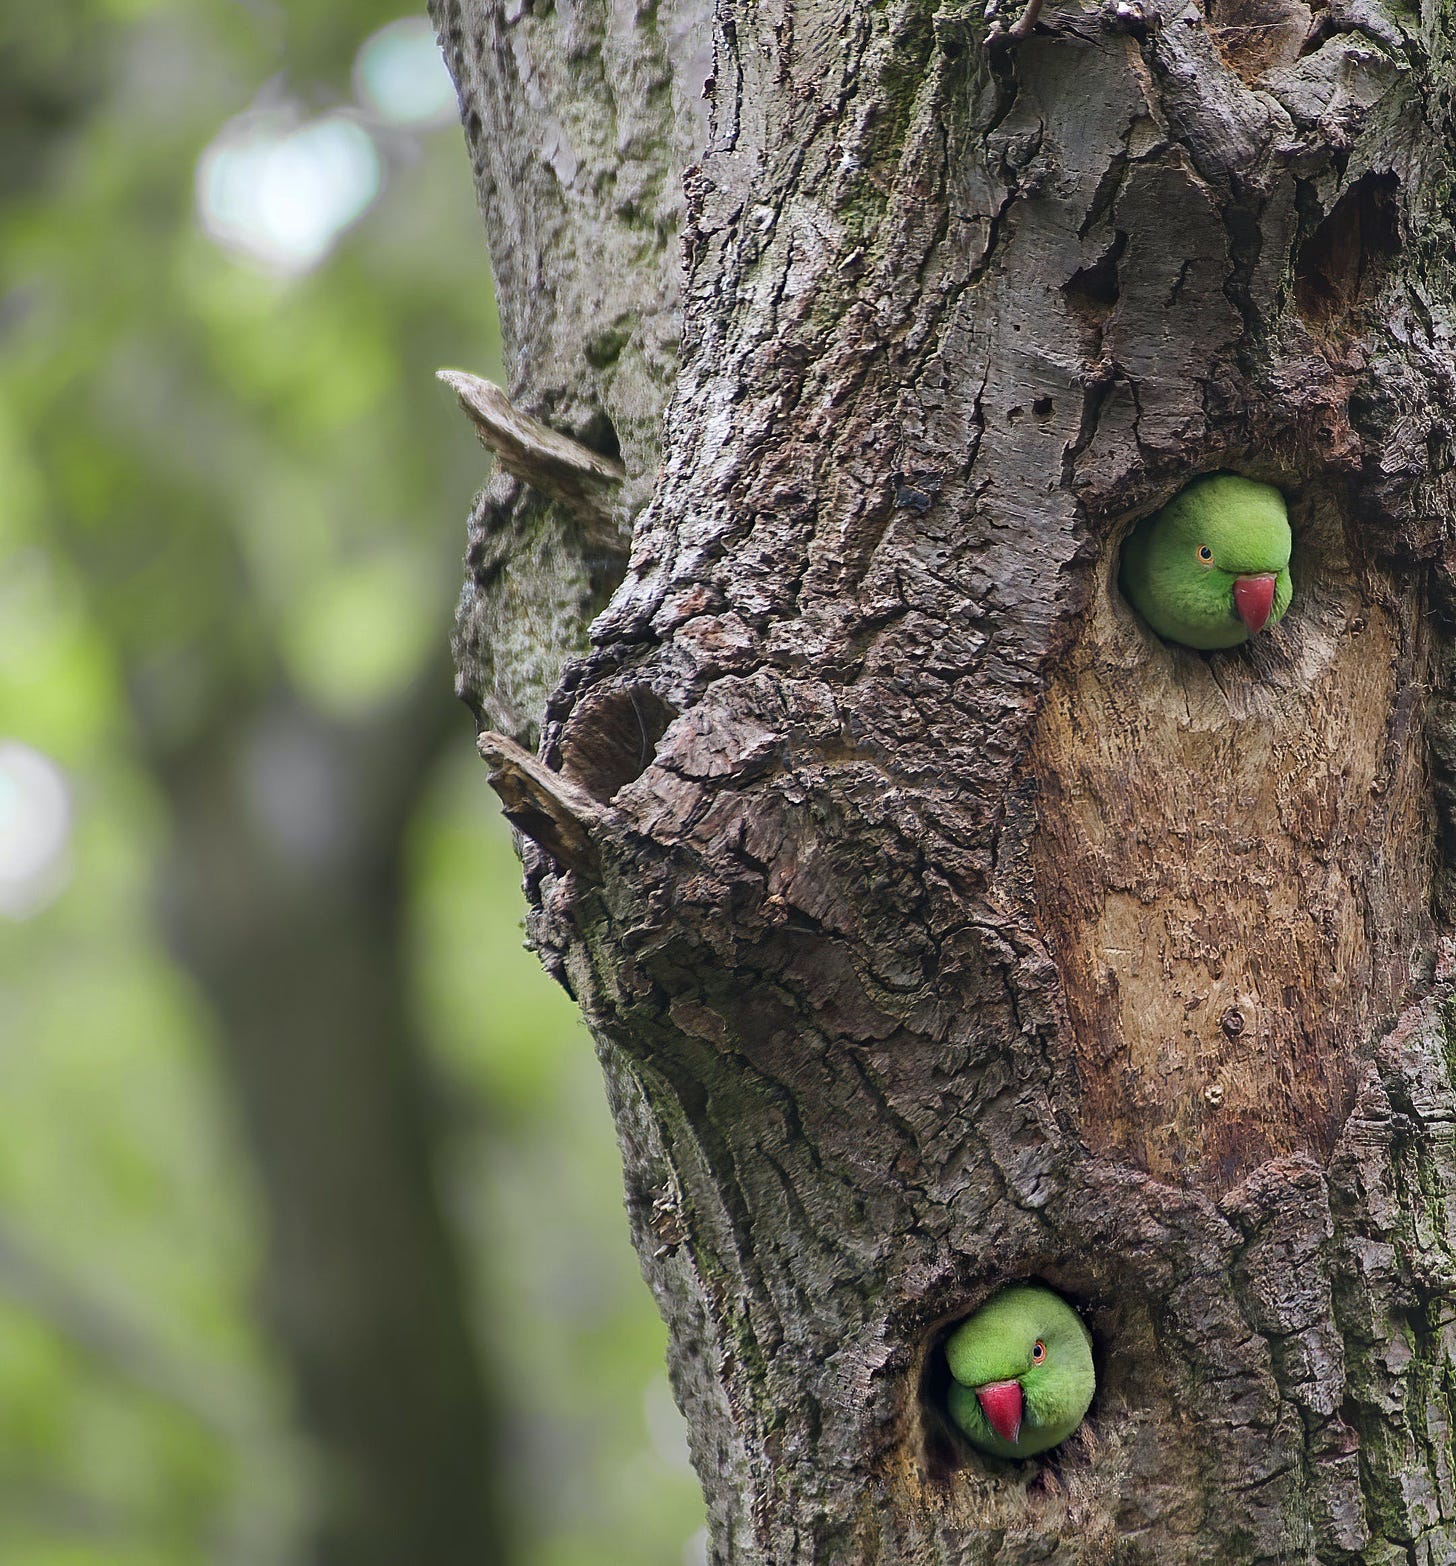 Parakeet neighbors in a tree